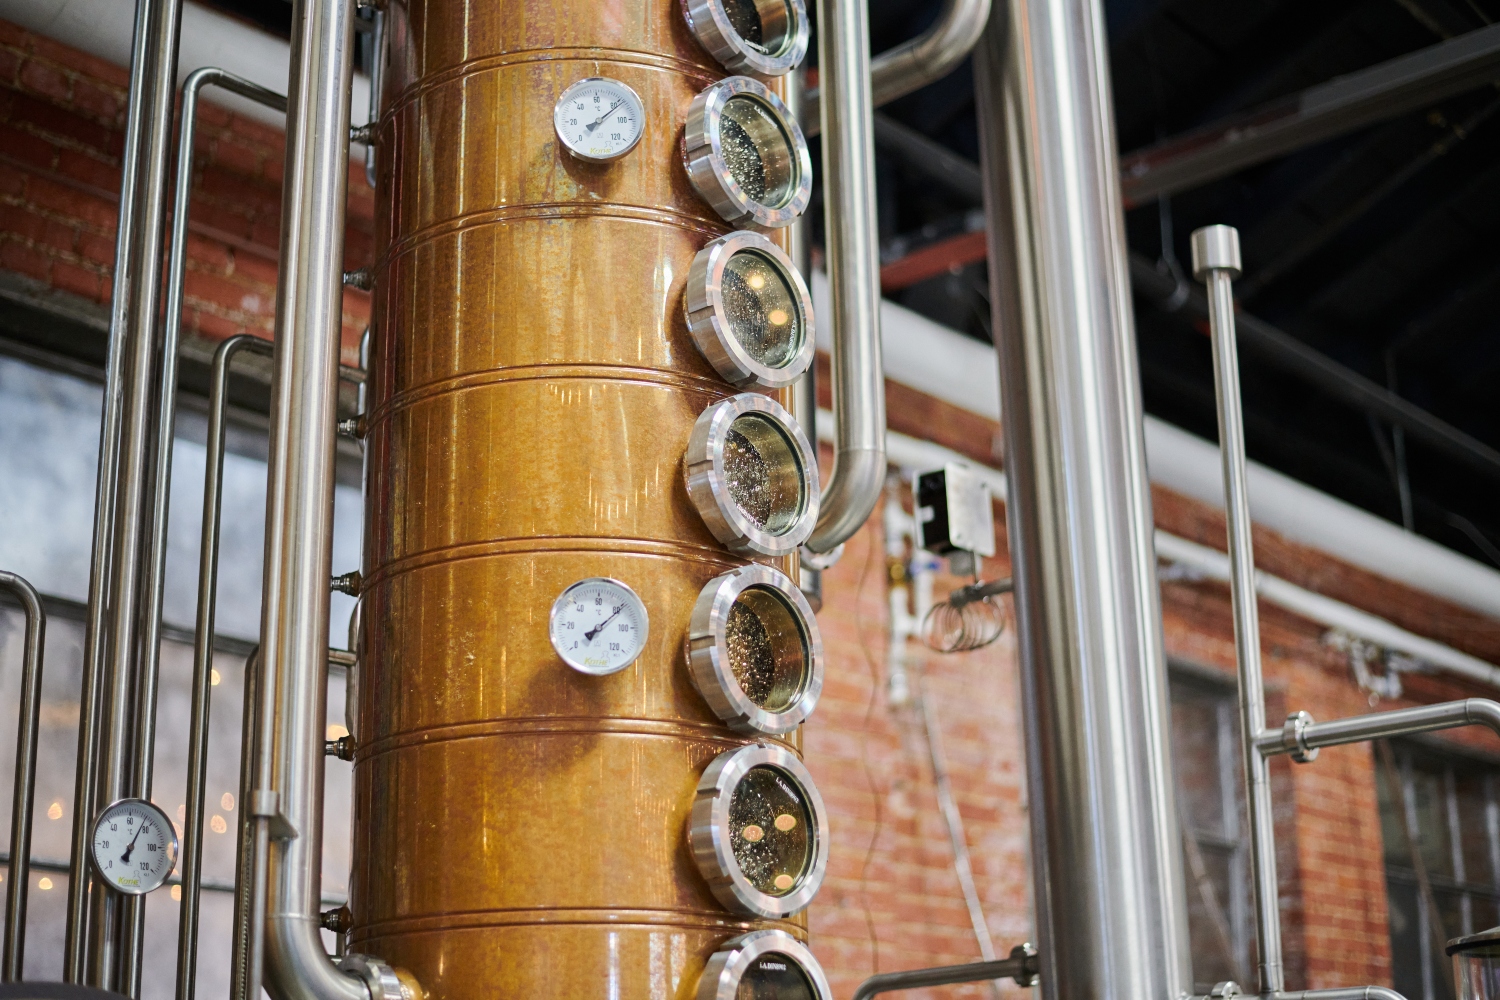 vodka distilling process at mcclintock distillery